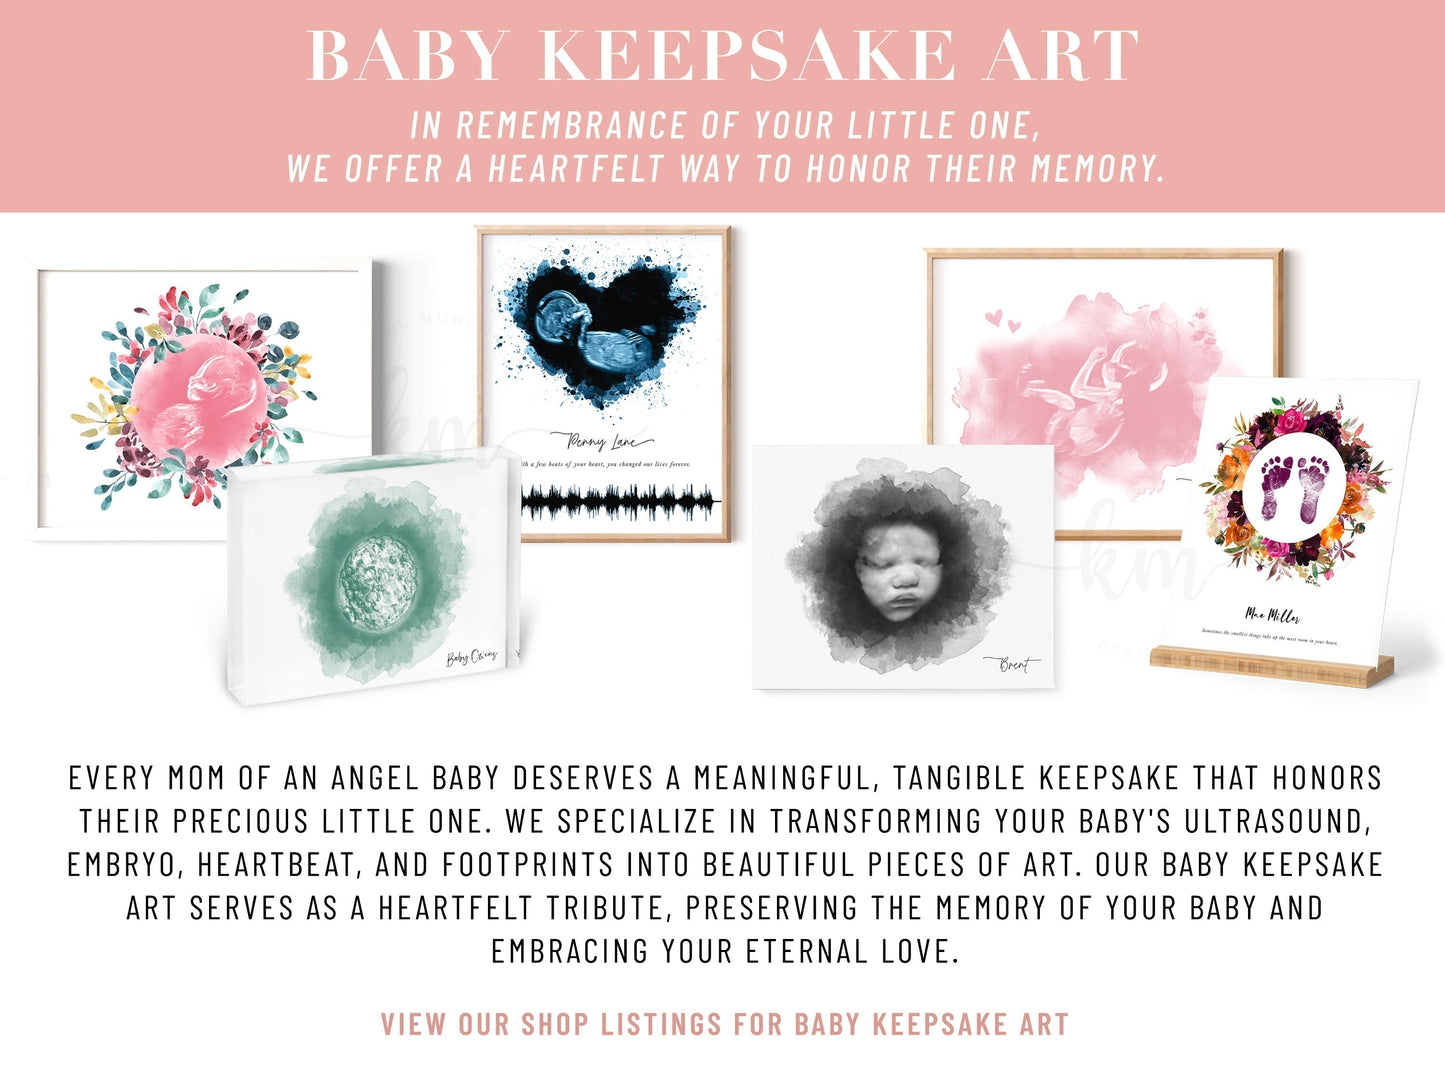 Pregnancy Loss baby keepsake art is available. Ultrasound art, embryo art, footprint art and heartbeat art.. Every mom of an angel baby deserves